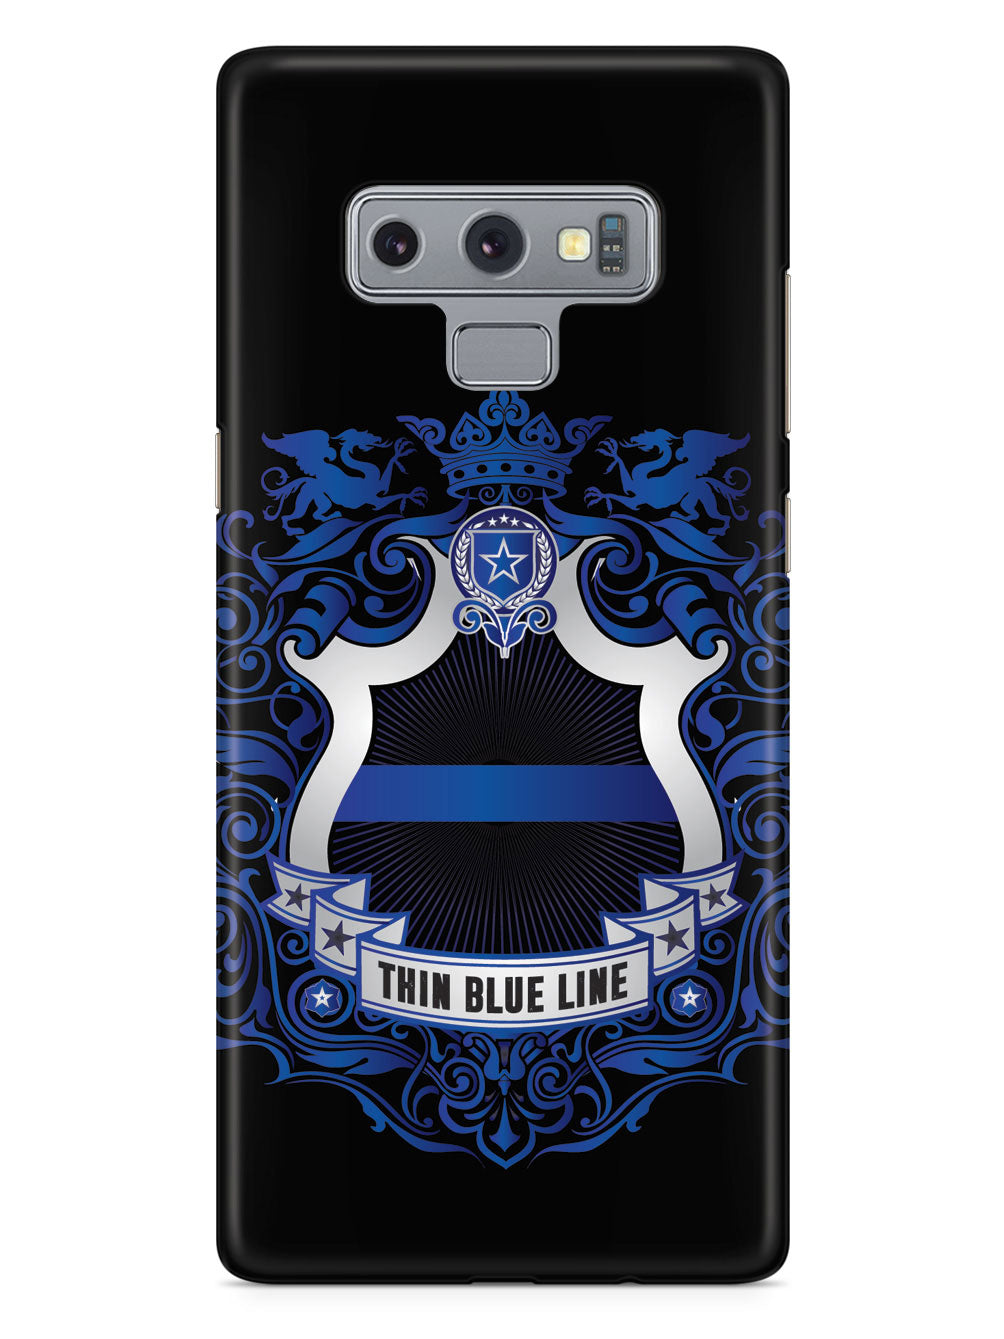 Thin Blue Line - Family Crest - Black Case